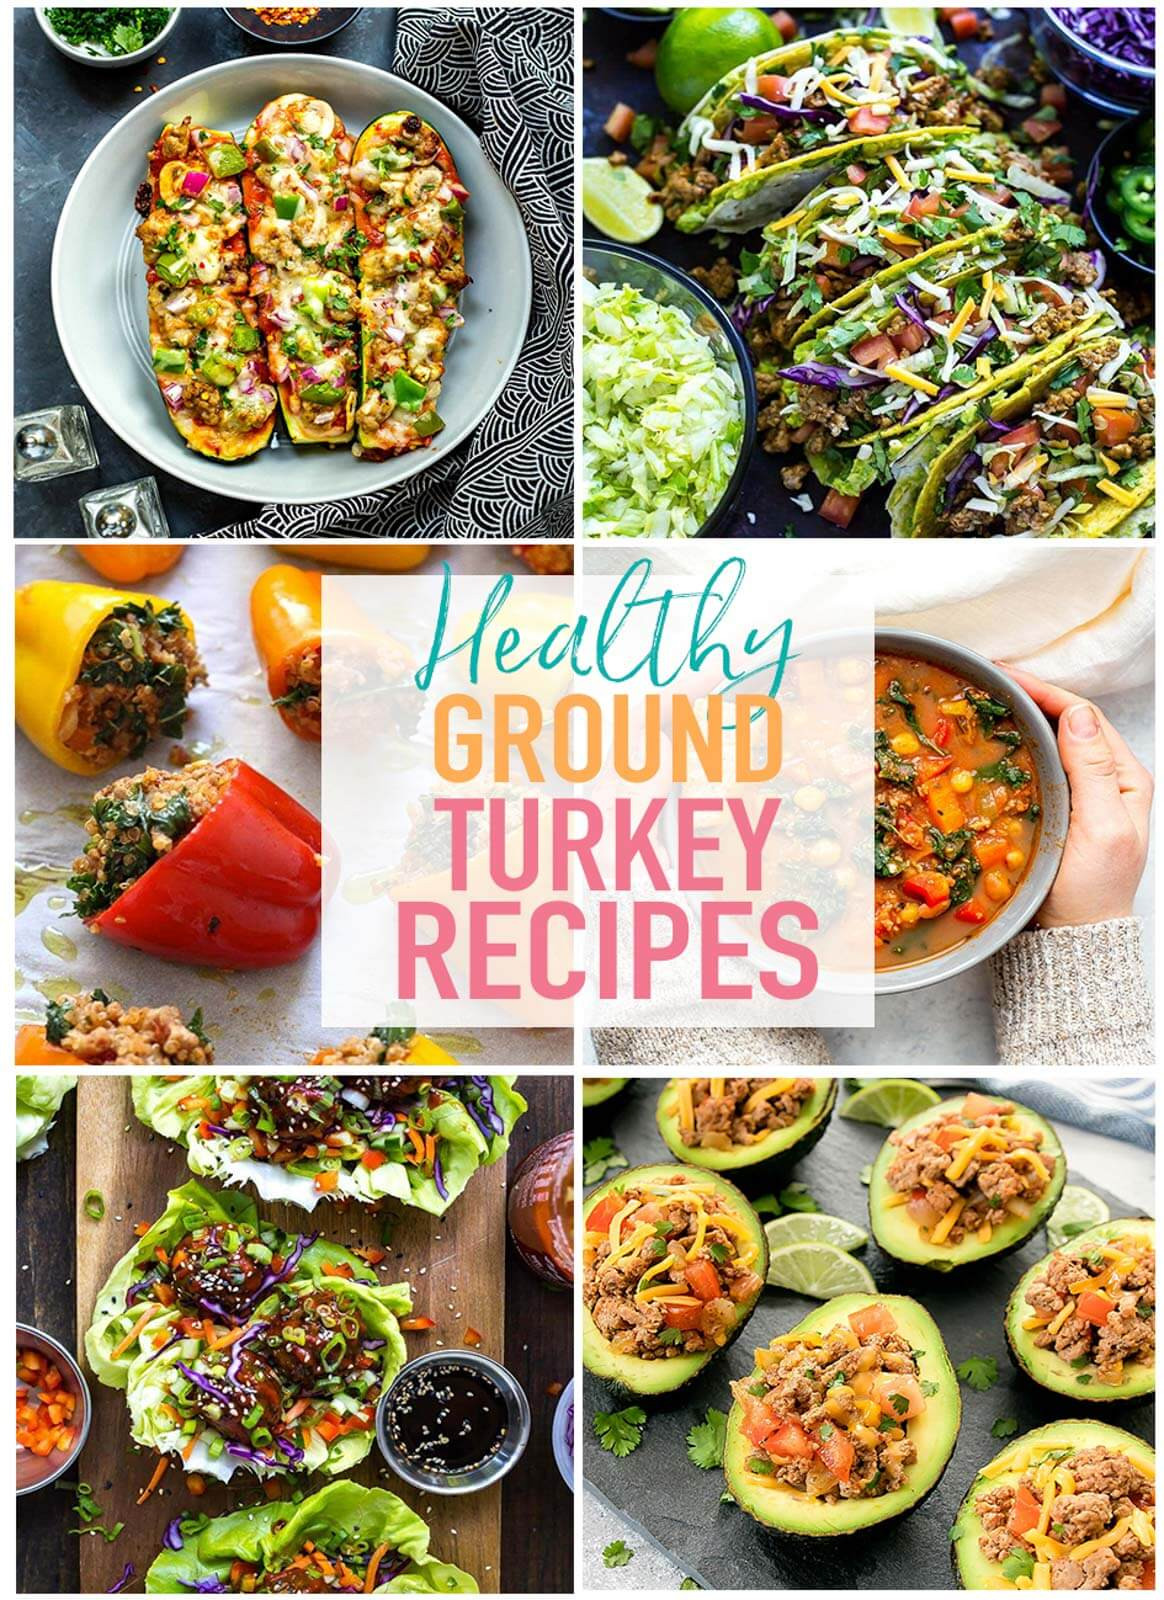 Ground Turkey Healthy Recipes the Best Ideas for 20 Delicious &amp; Healthy Ground Turkey Recipes the Girl On